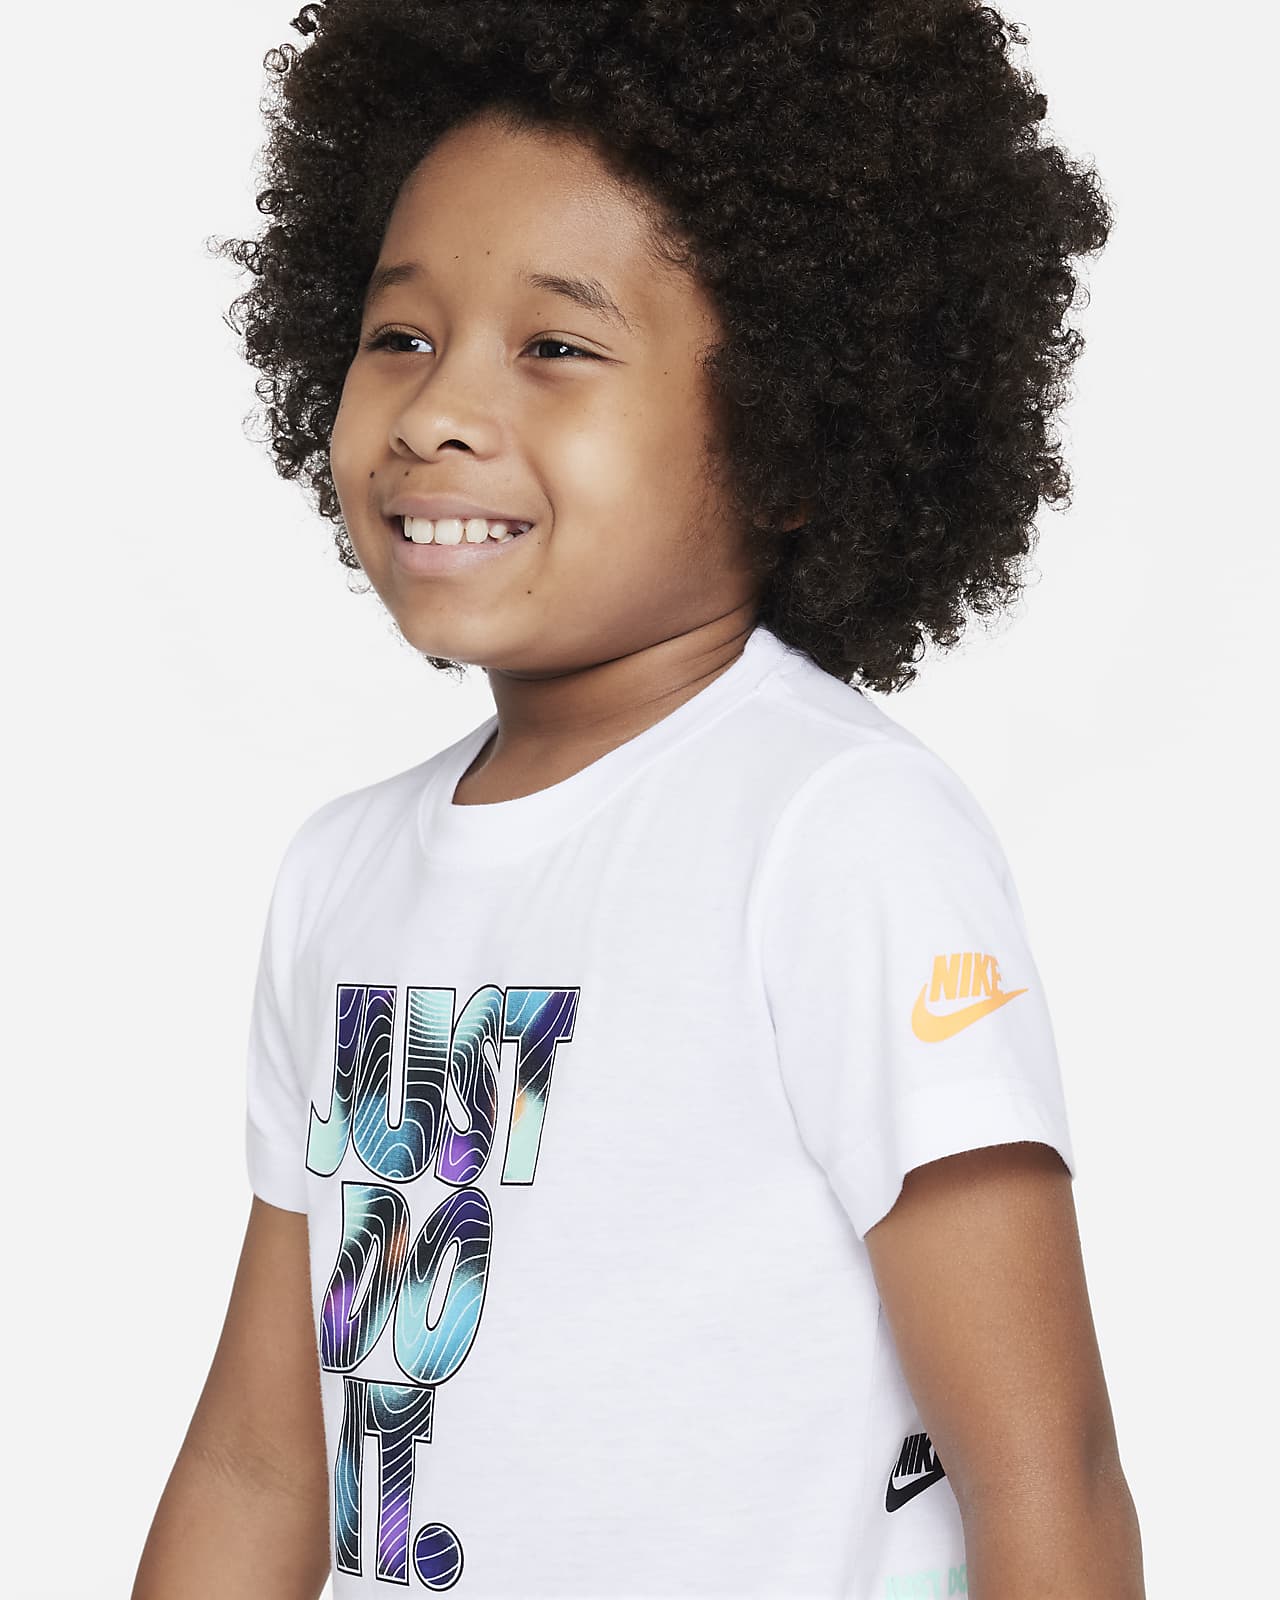 Dibujar Lógicamente palanca Nike "Just Do It" Illuminate Tee Camiseta - Niño/a pequeño/a. Nike ES